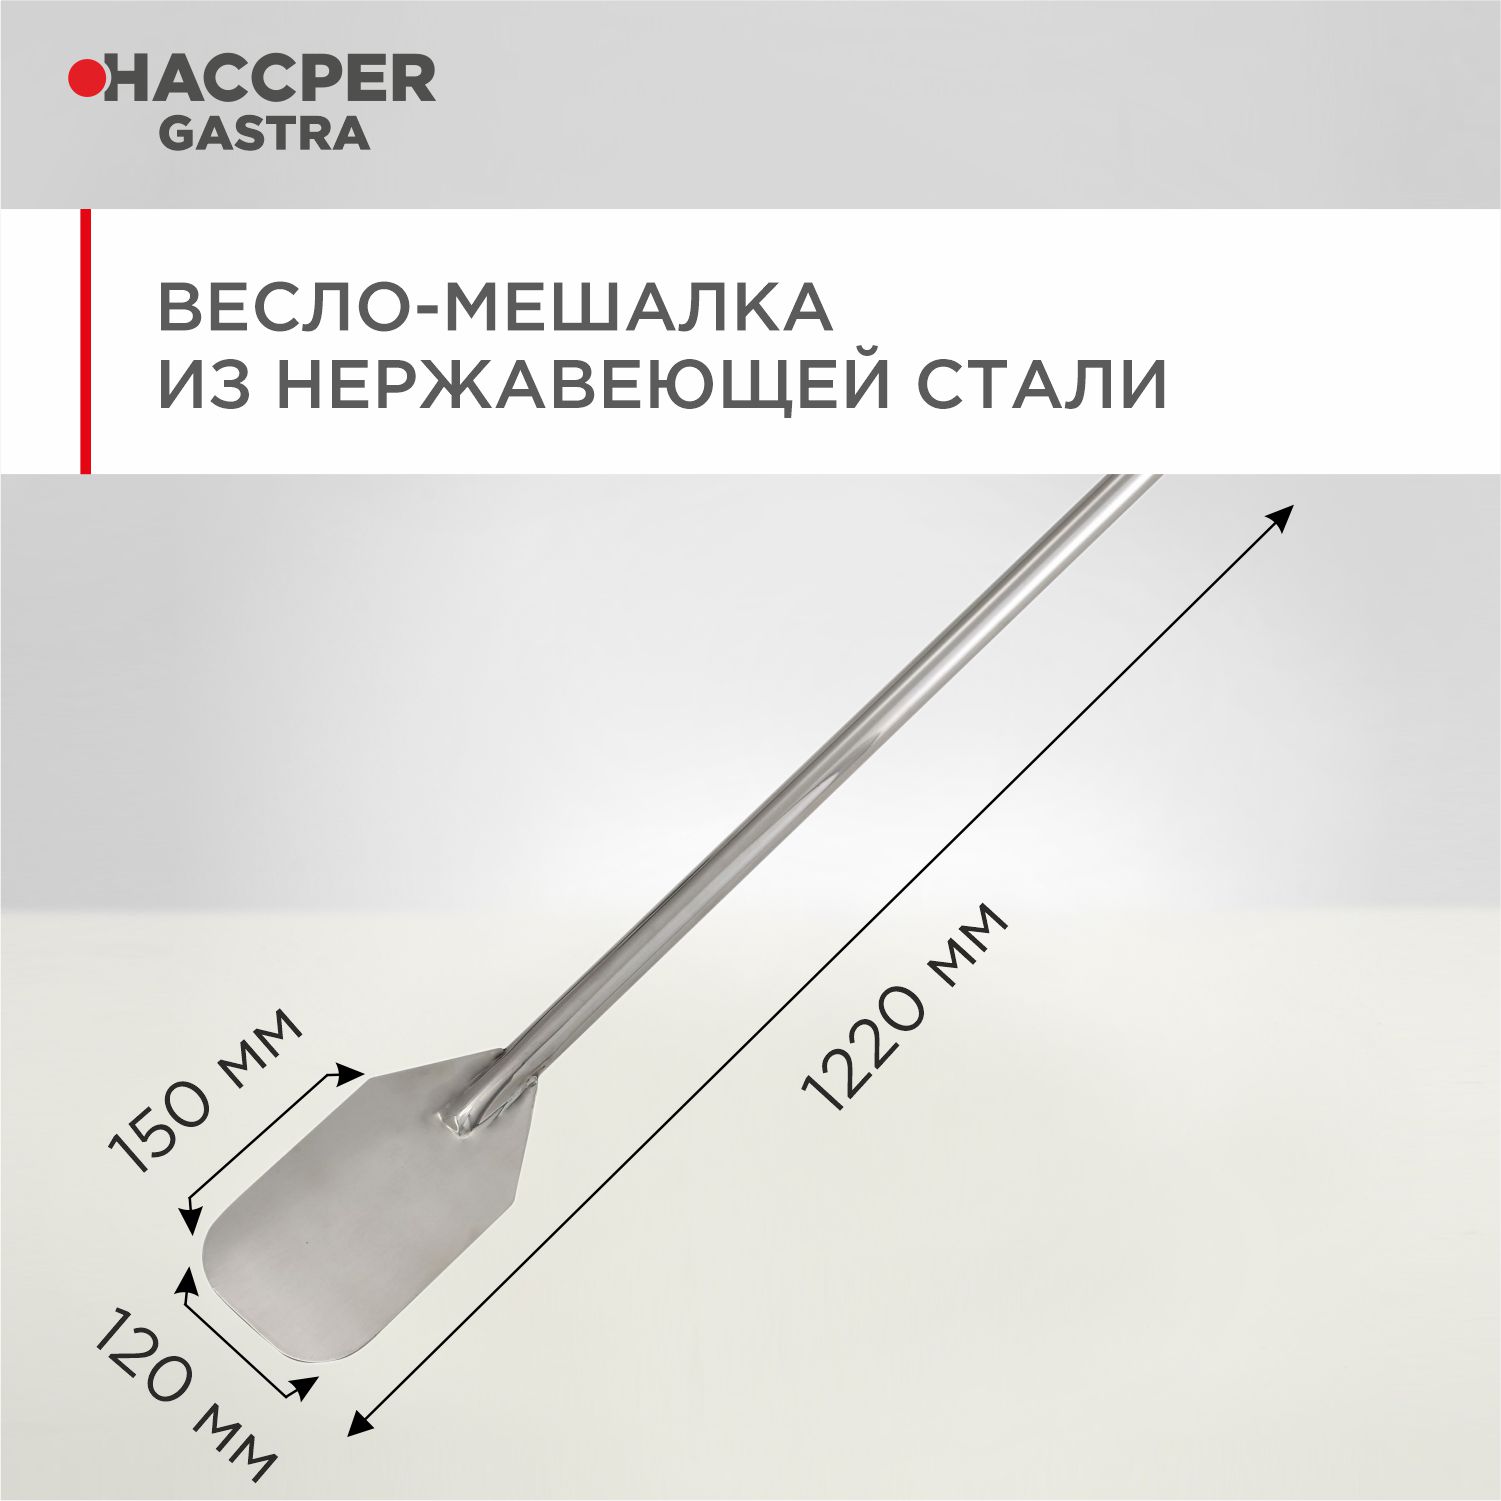 Весло-мешалка HACCPER из нержавеющей стали, 1220 мм